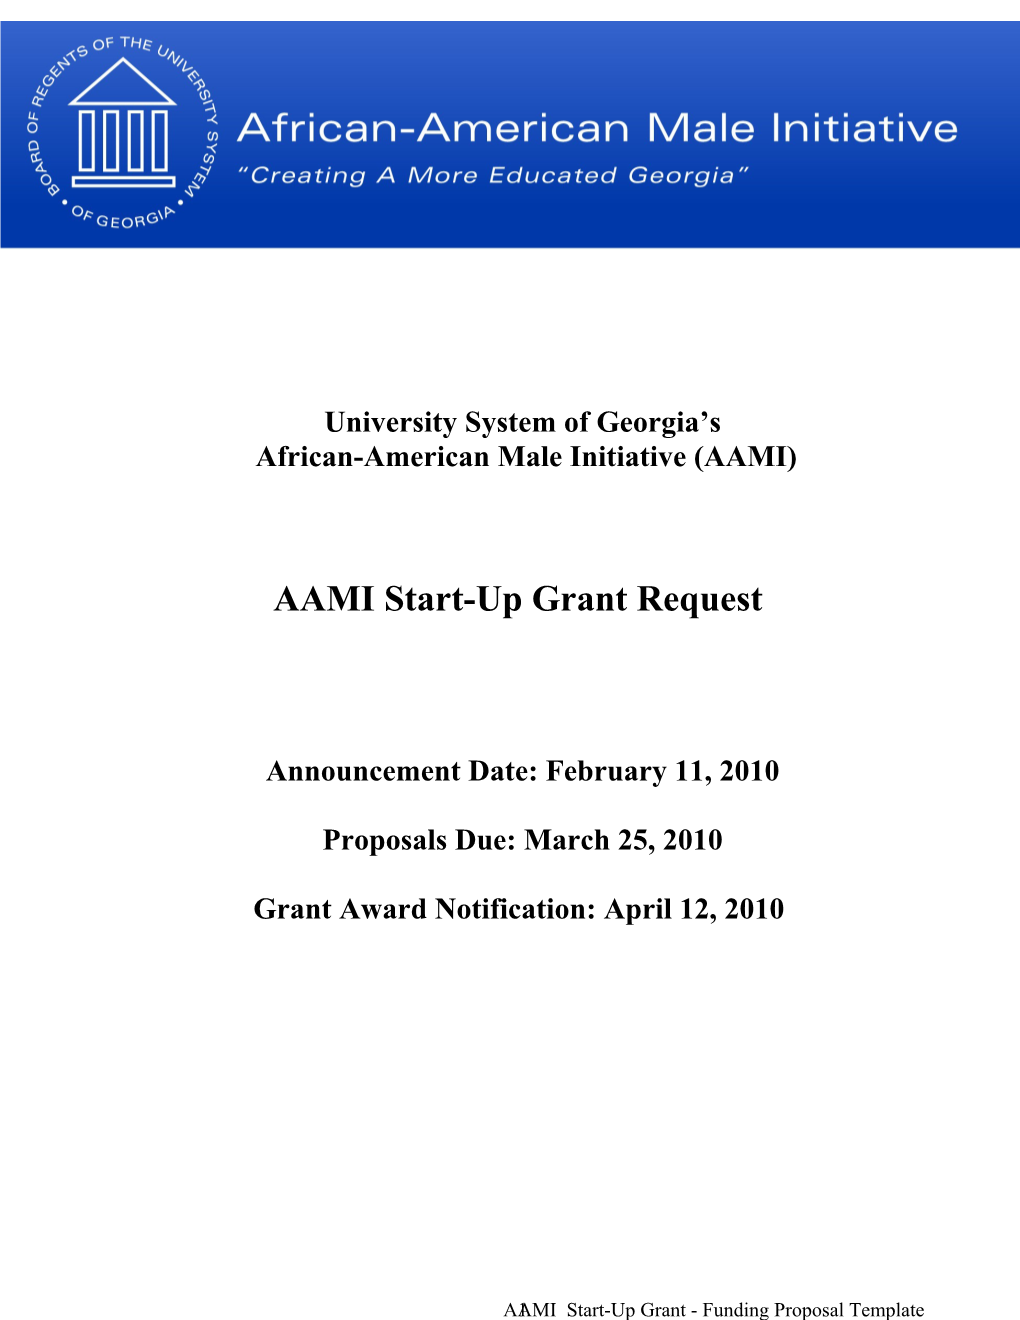 African-American Male Initiative (AAMI)